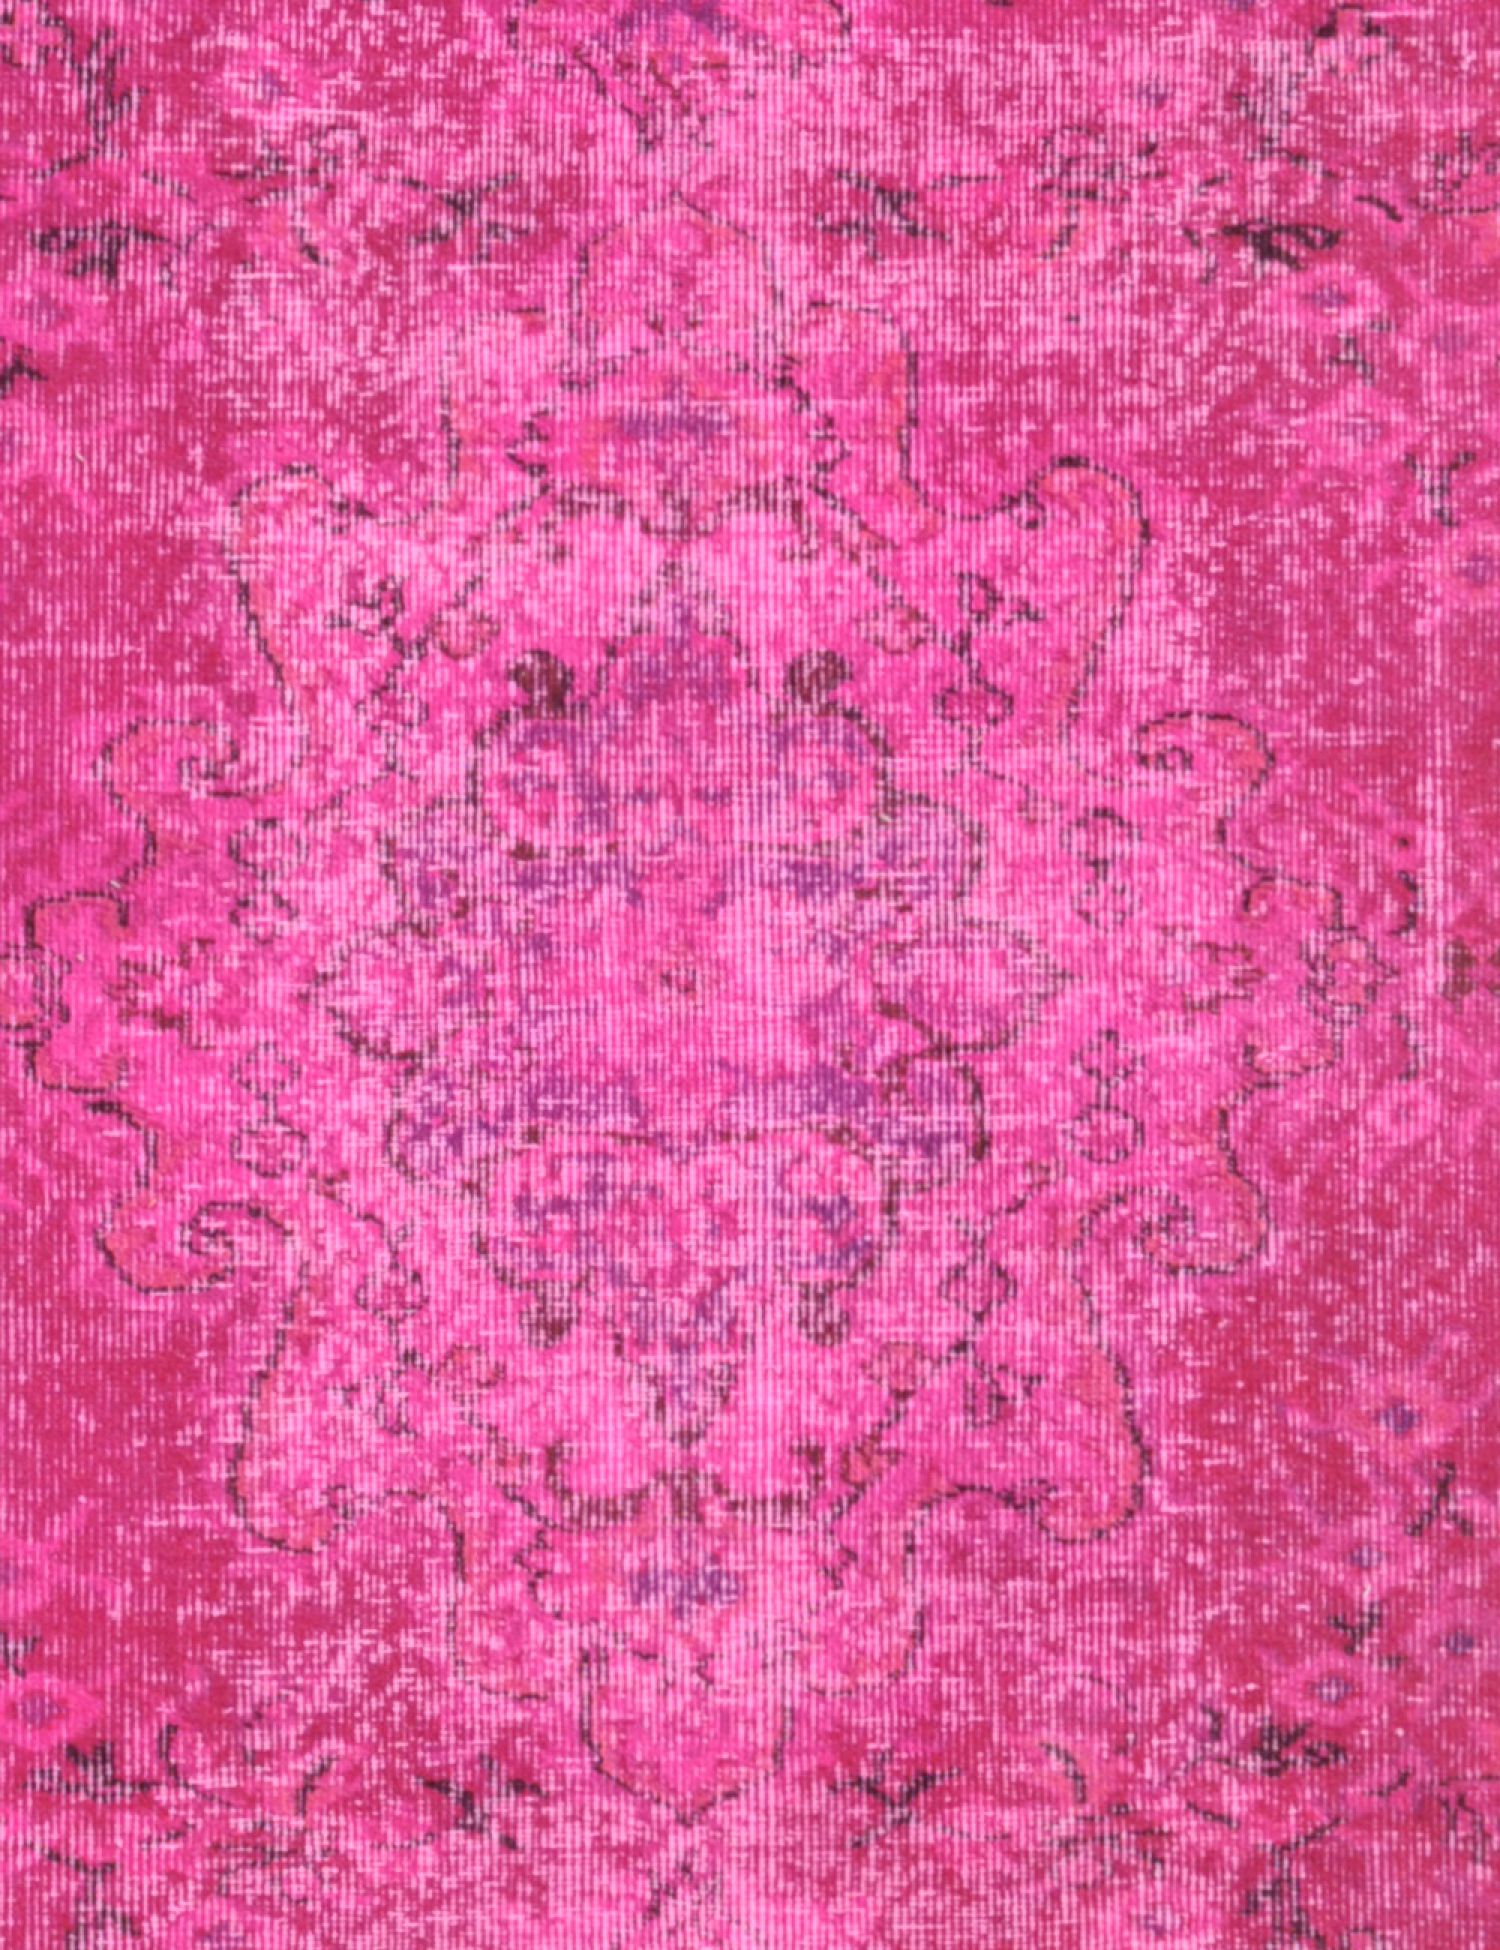 Vintage Carpet  violetti <br/>255 x 183 cm